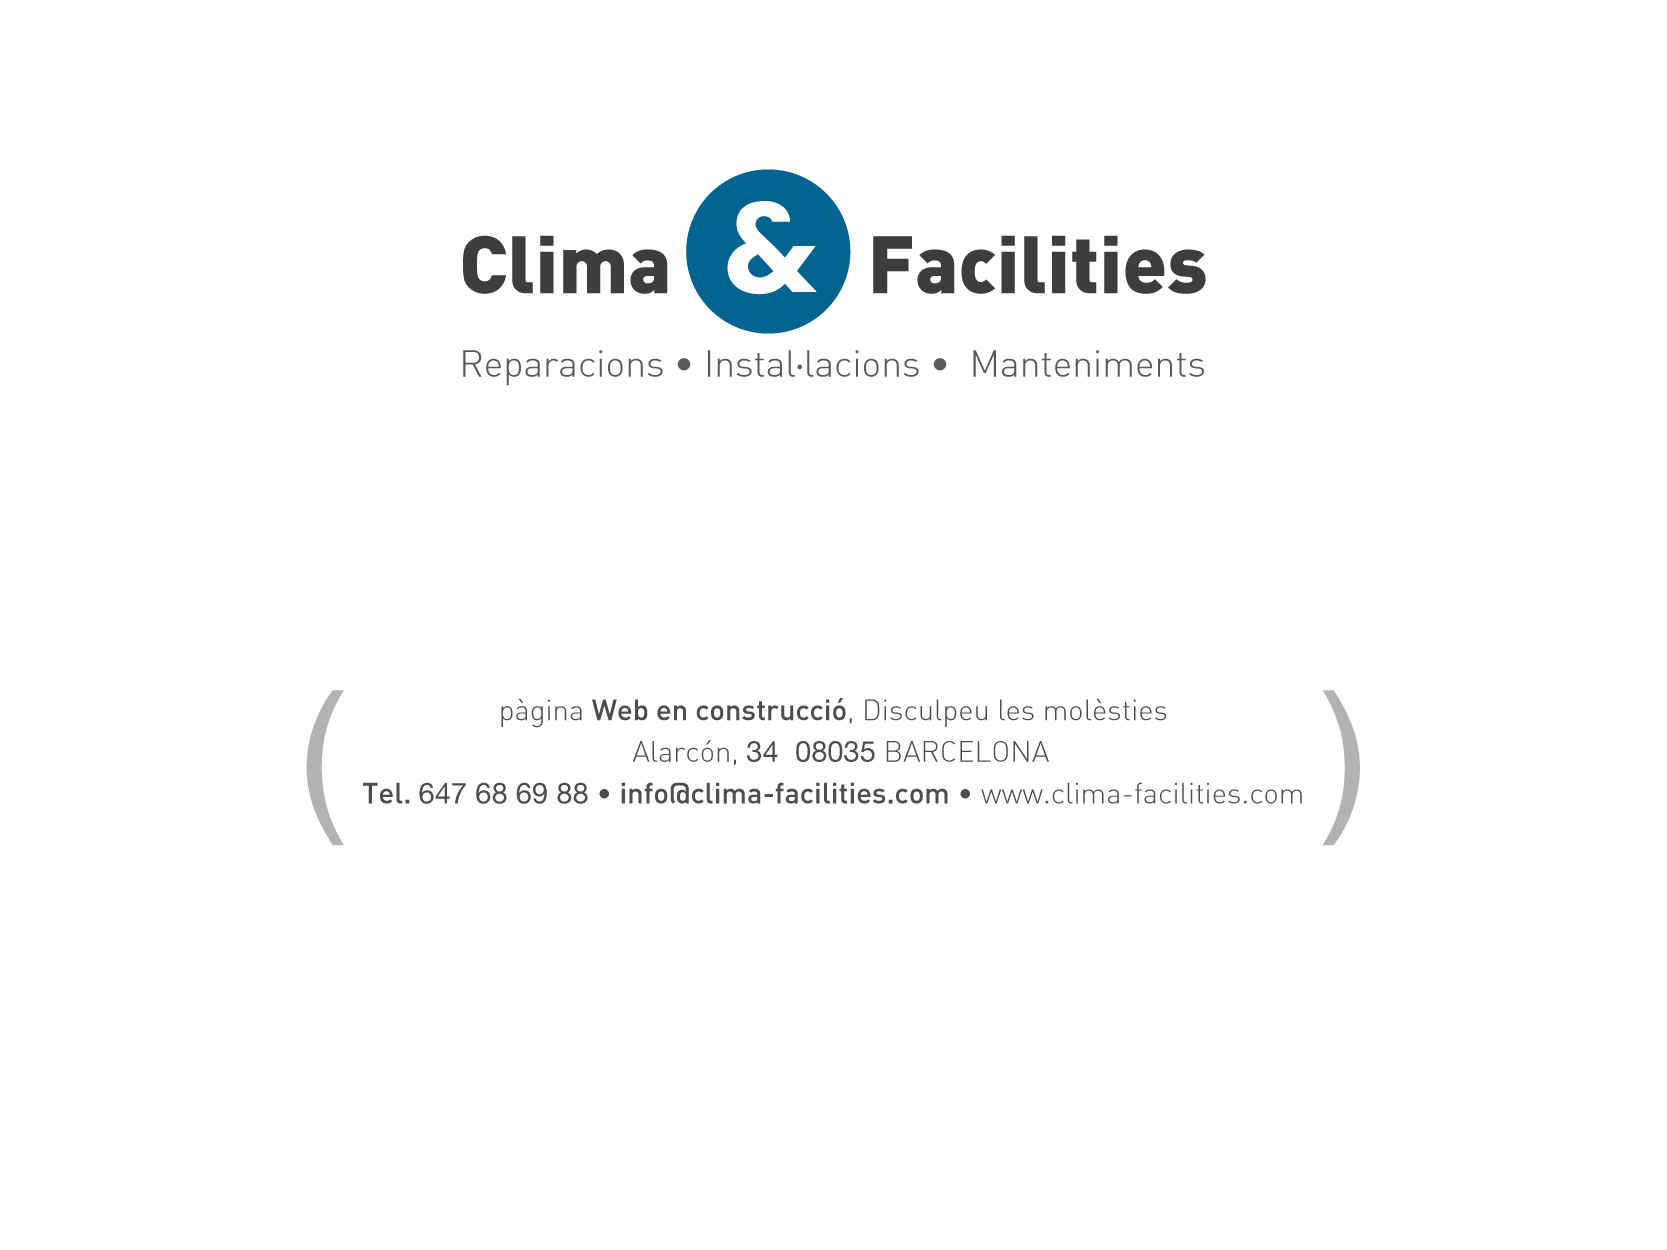 Clima & Facilities